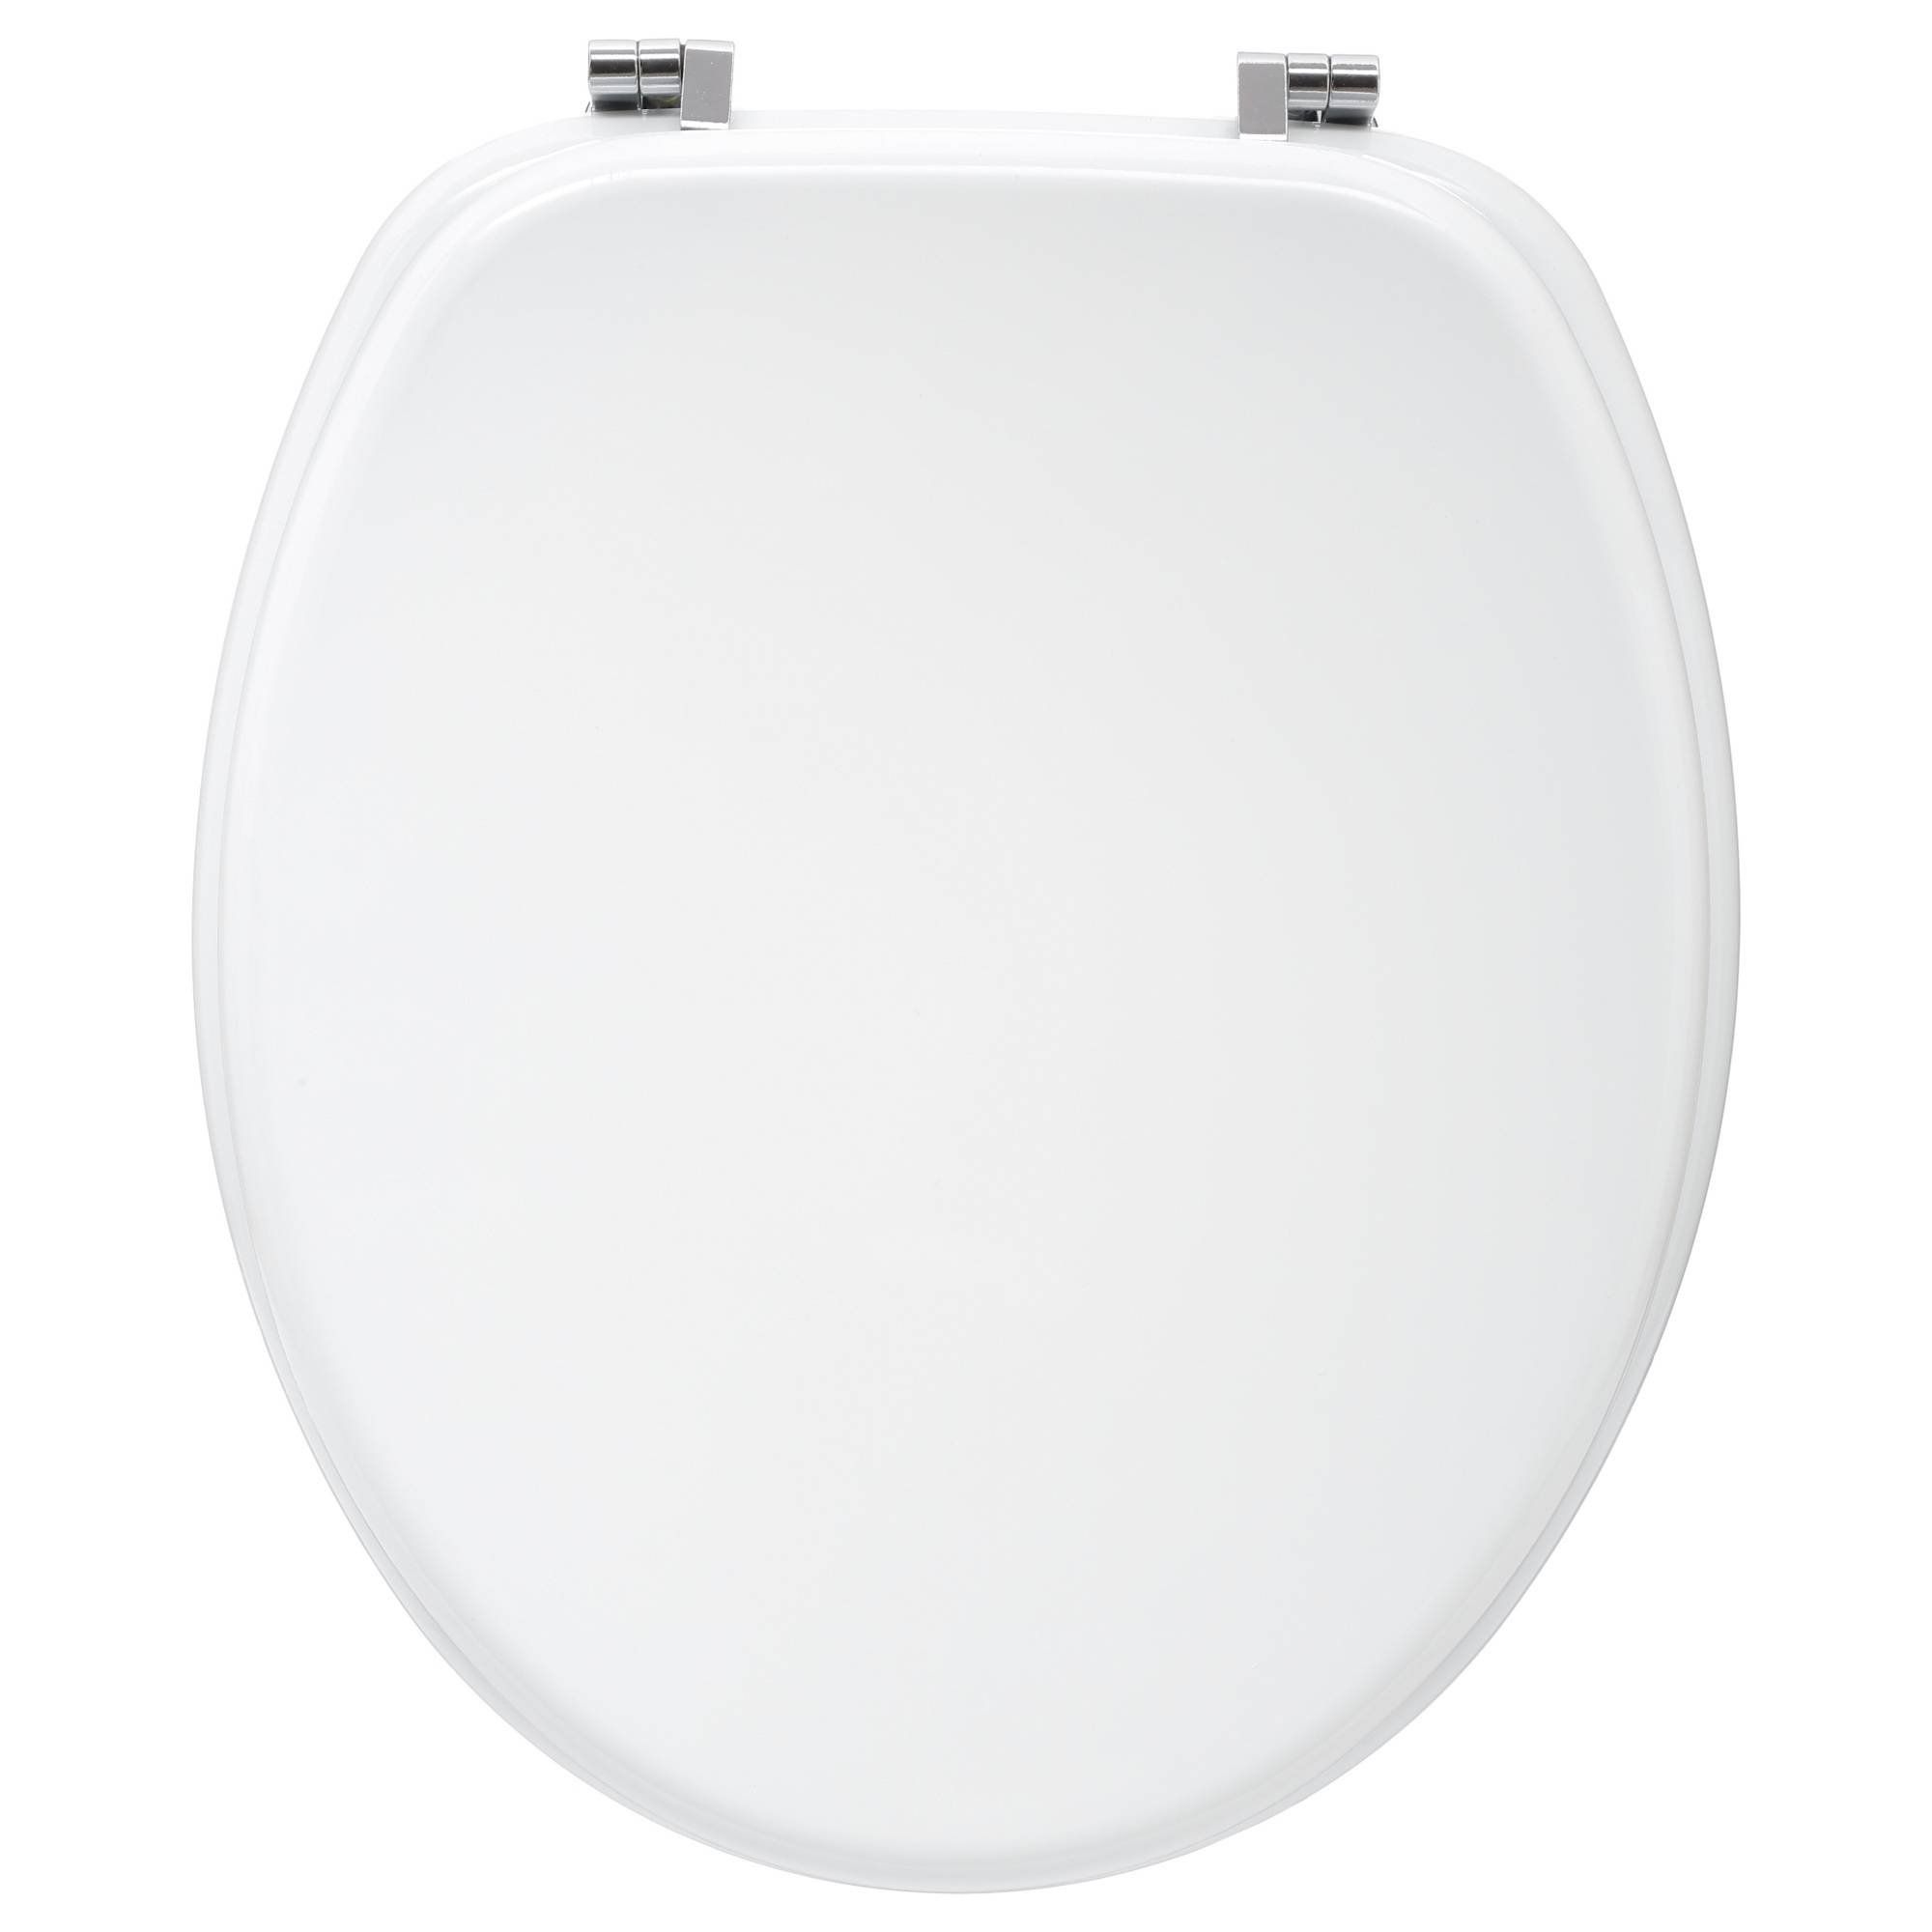 5five Simply Smart WC sedátko, 37 x 43 cm, bílé - EMAKO.CZ s.r.o.